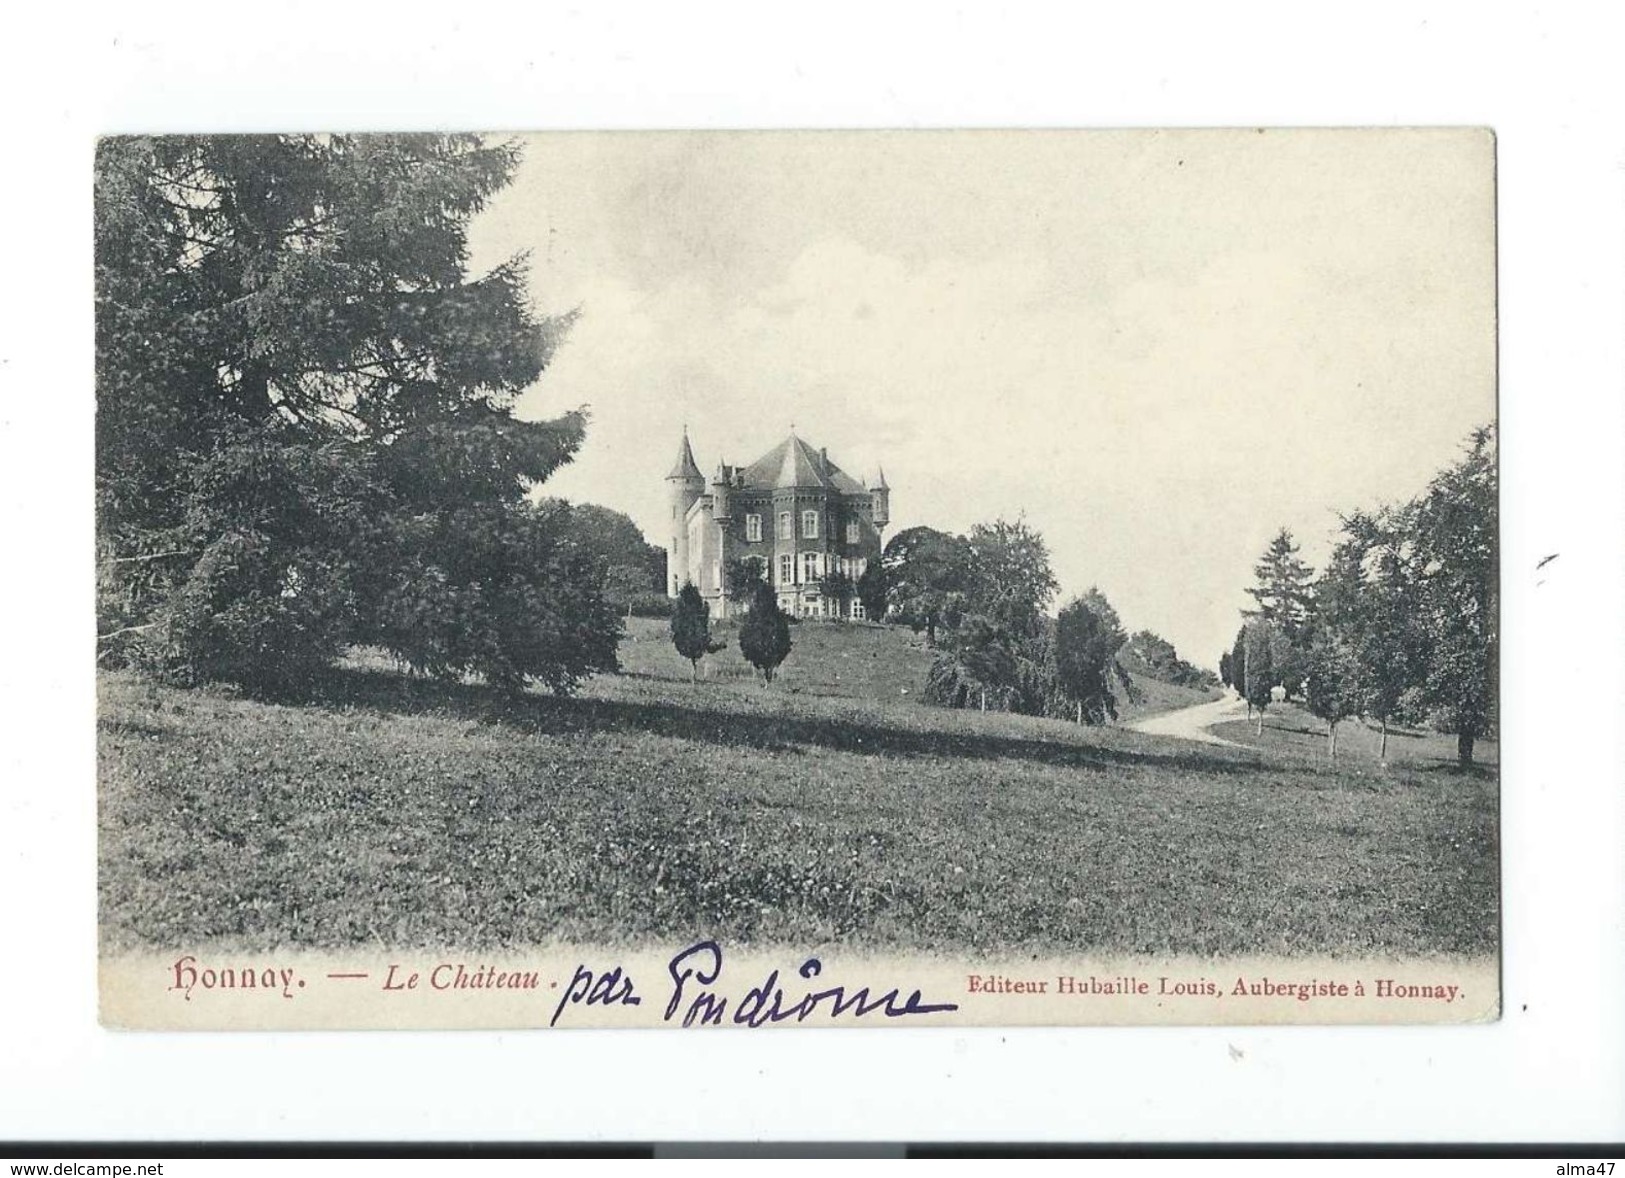 Honnay - Le Château - Circulé - Edit. Hubaille Louis, Aubergiste à Honnay - Beauraing